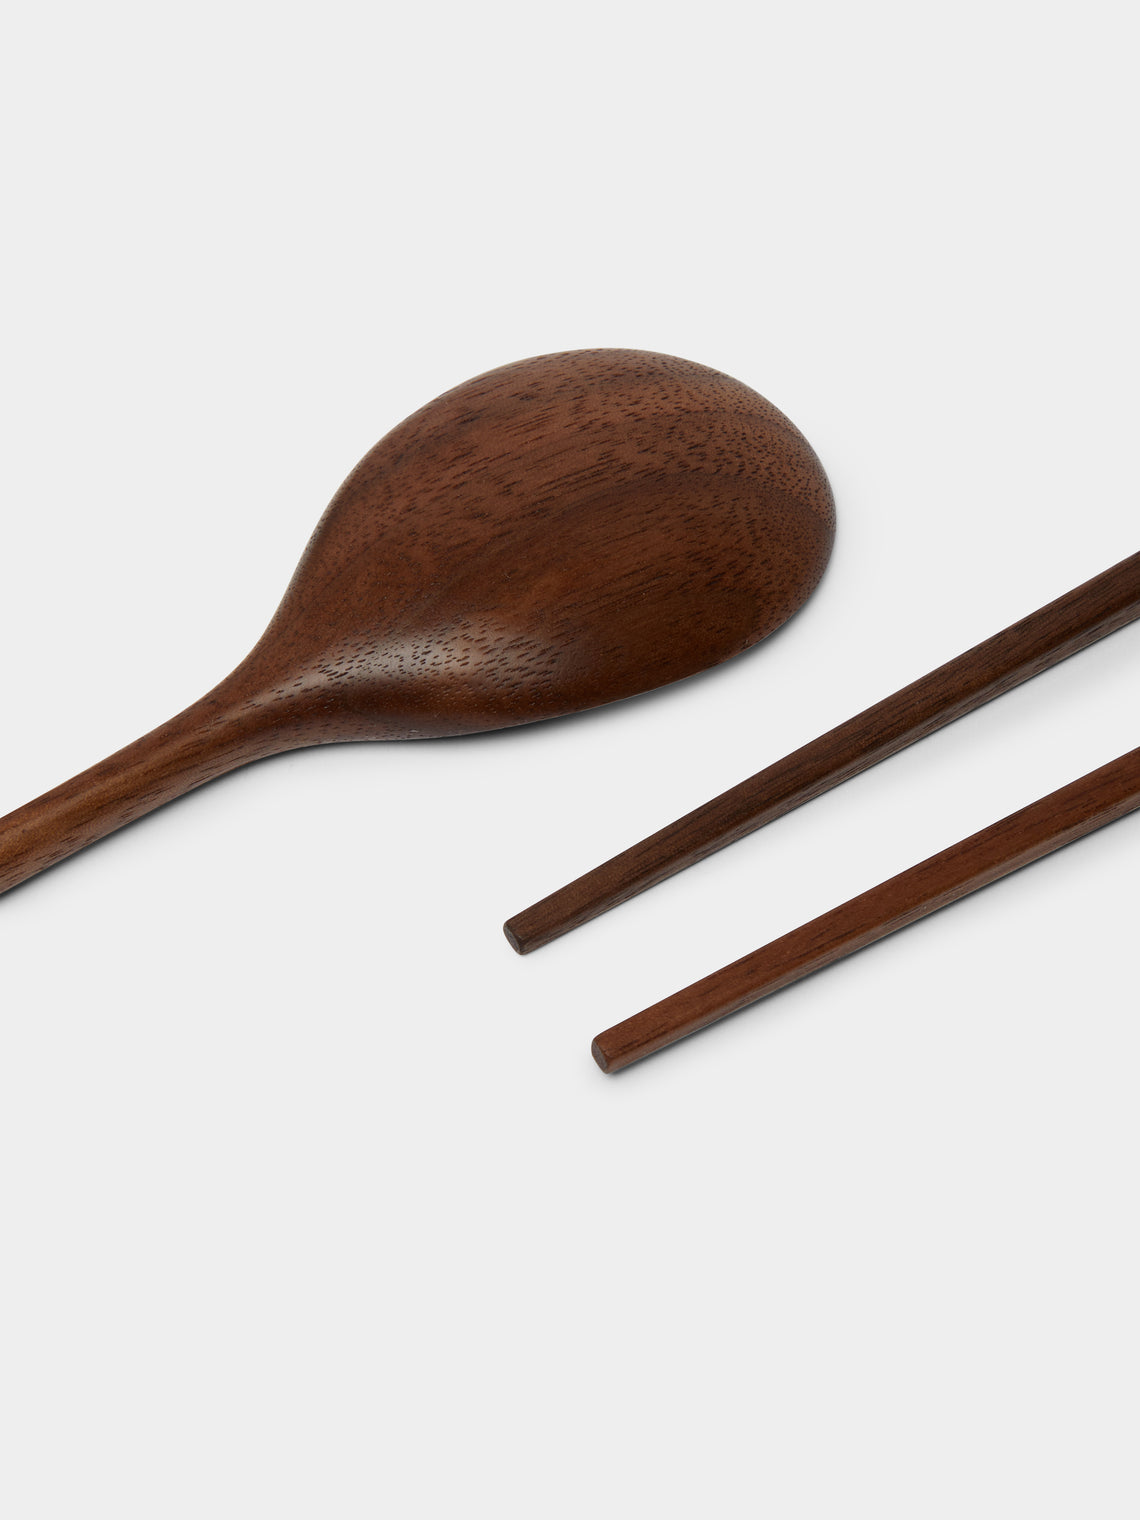 Jaejin Choi - Hand-Carved Walnut Spoon and Chopsticks Set -  - ABASK